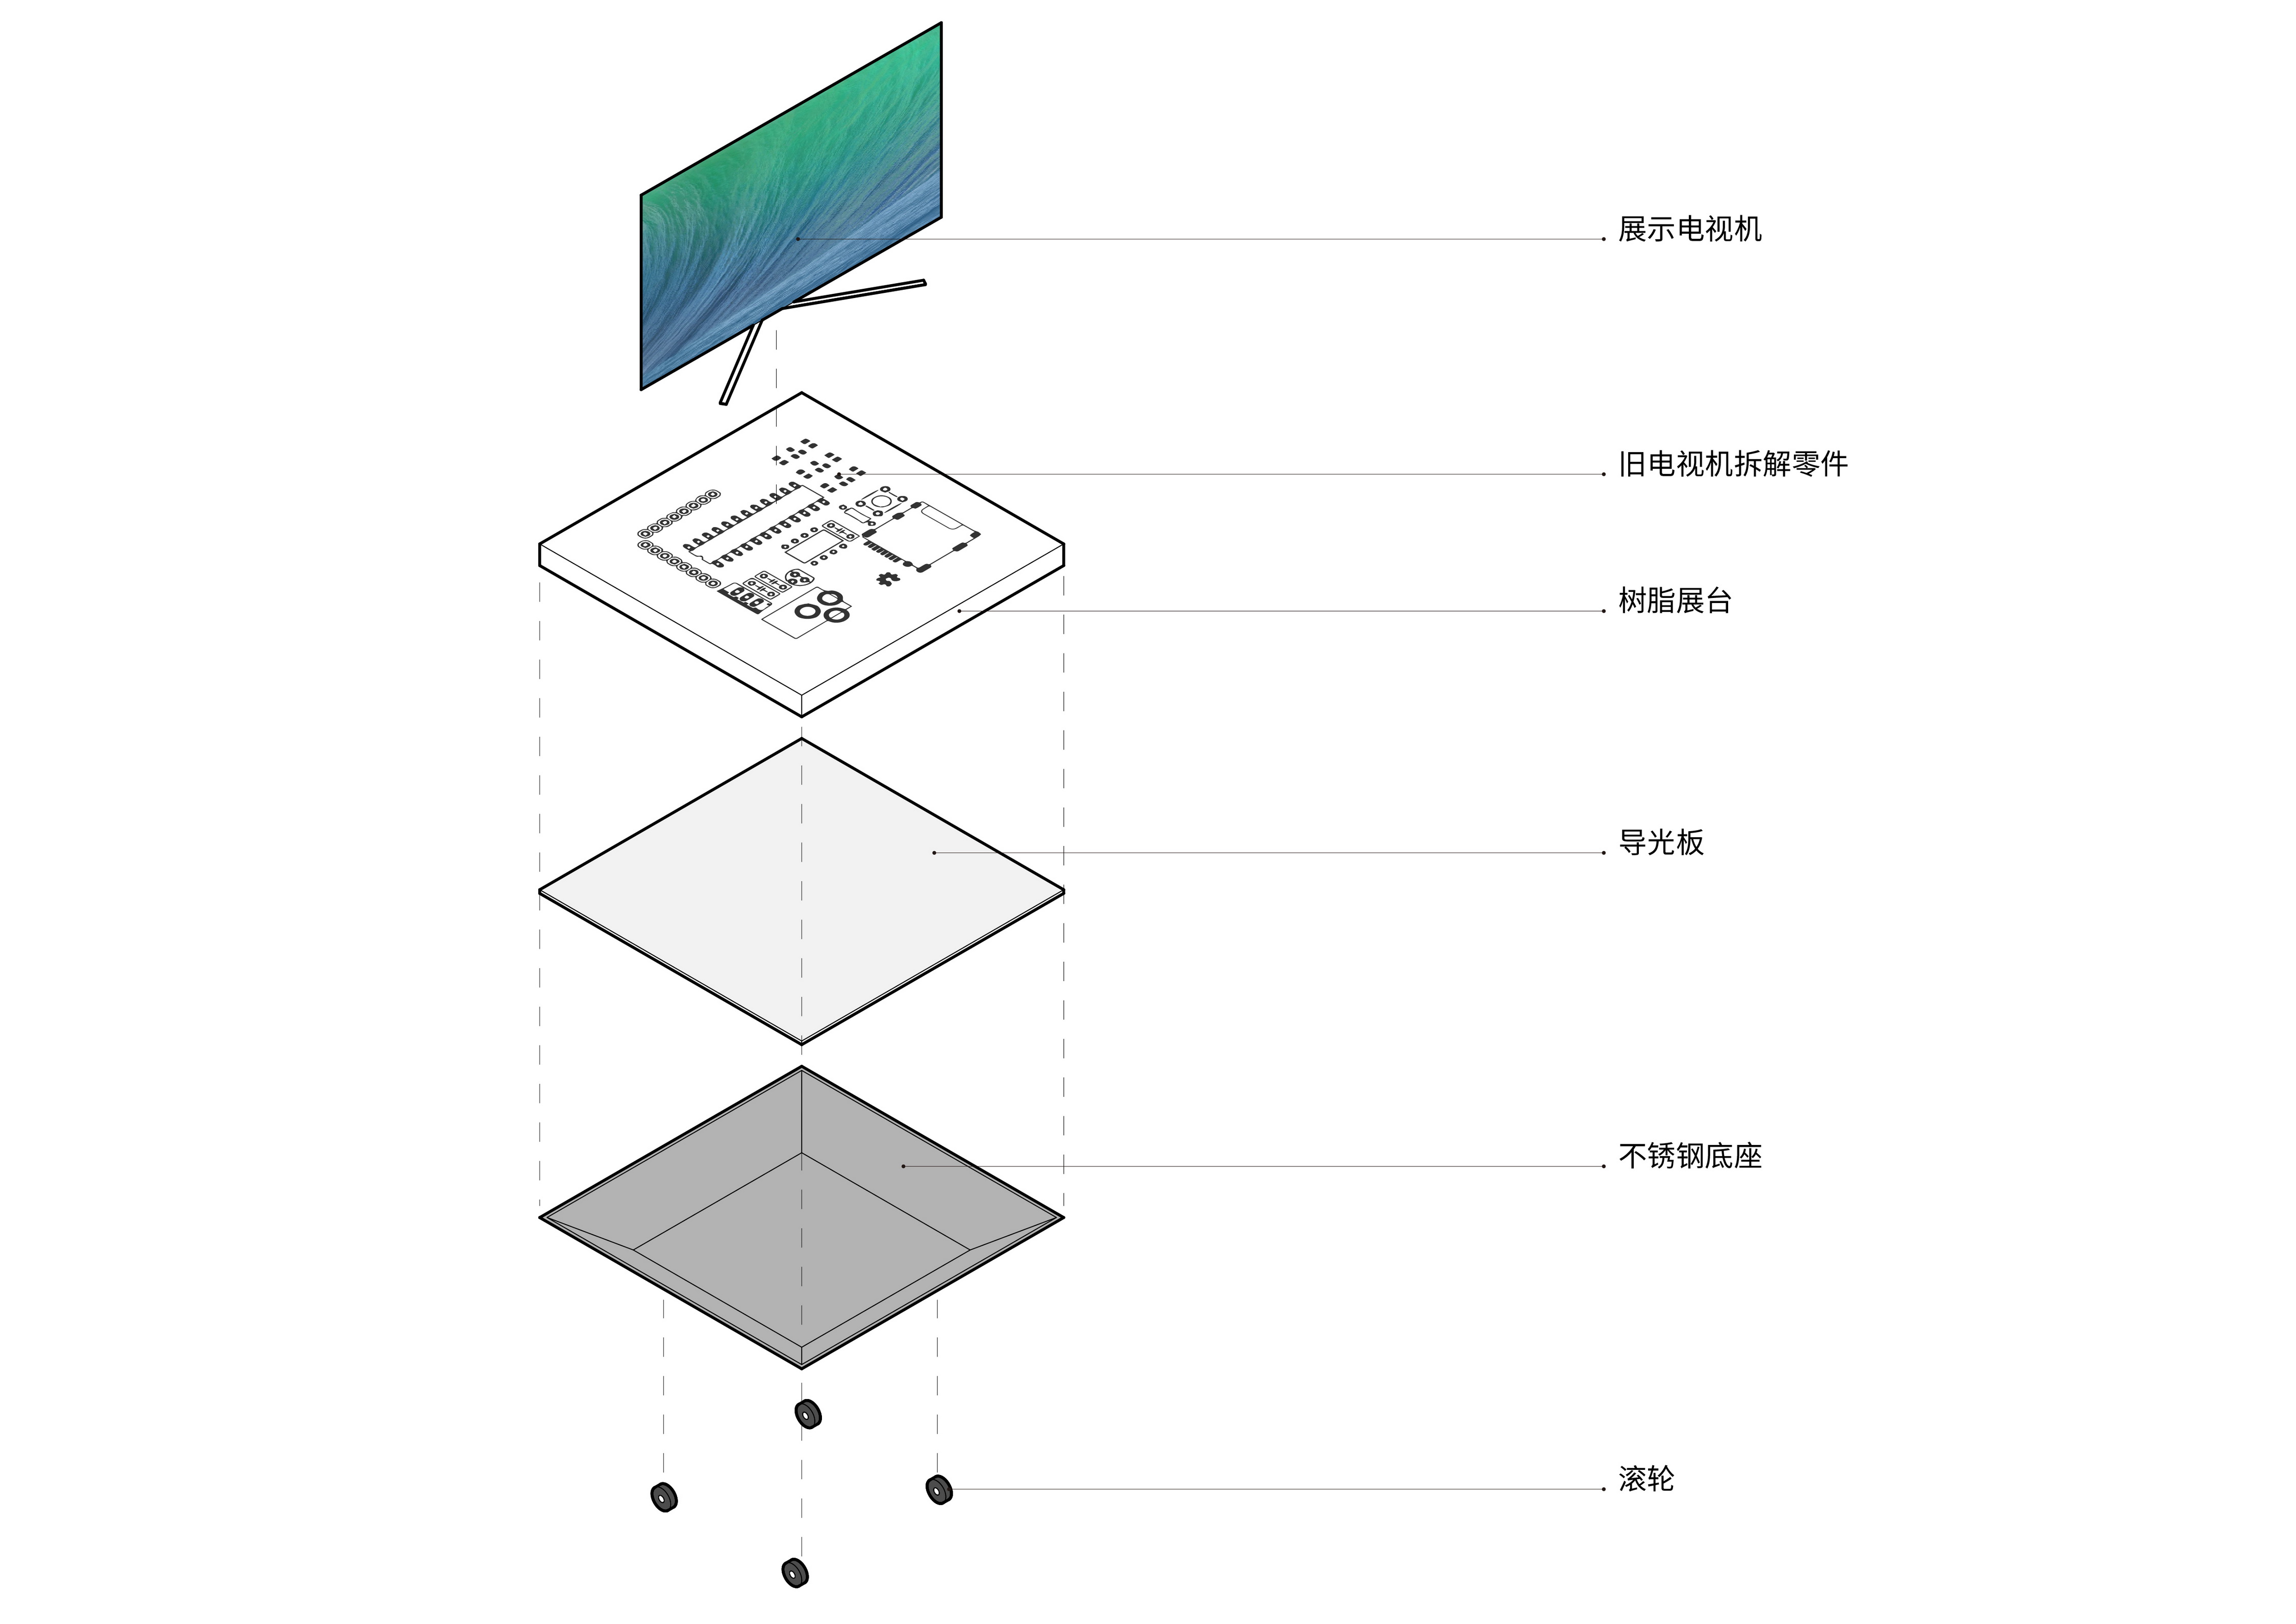 h3 树脂展台构成分析图_调整大小.jpg